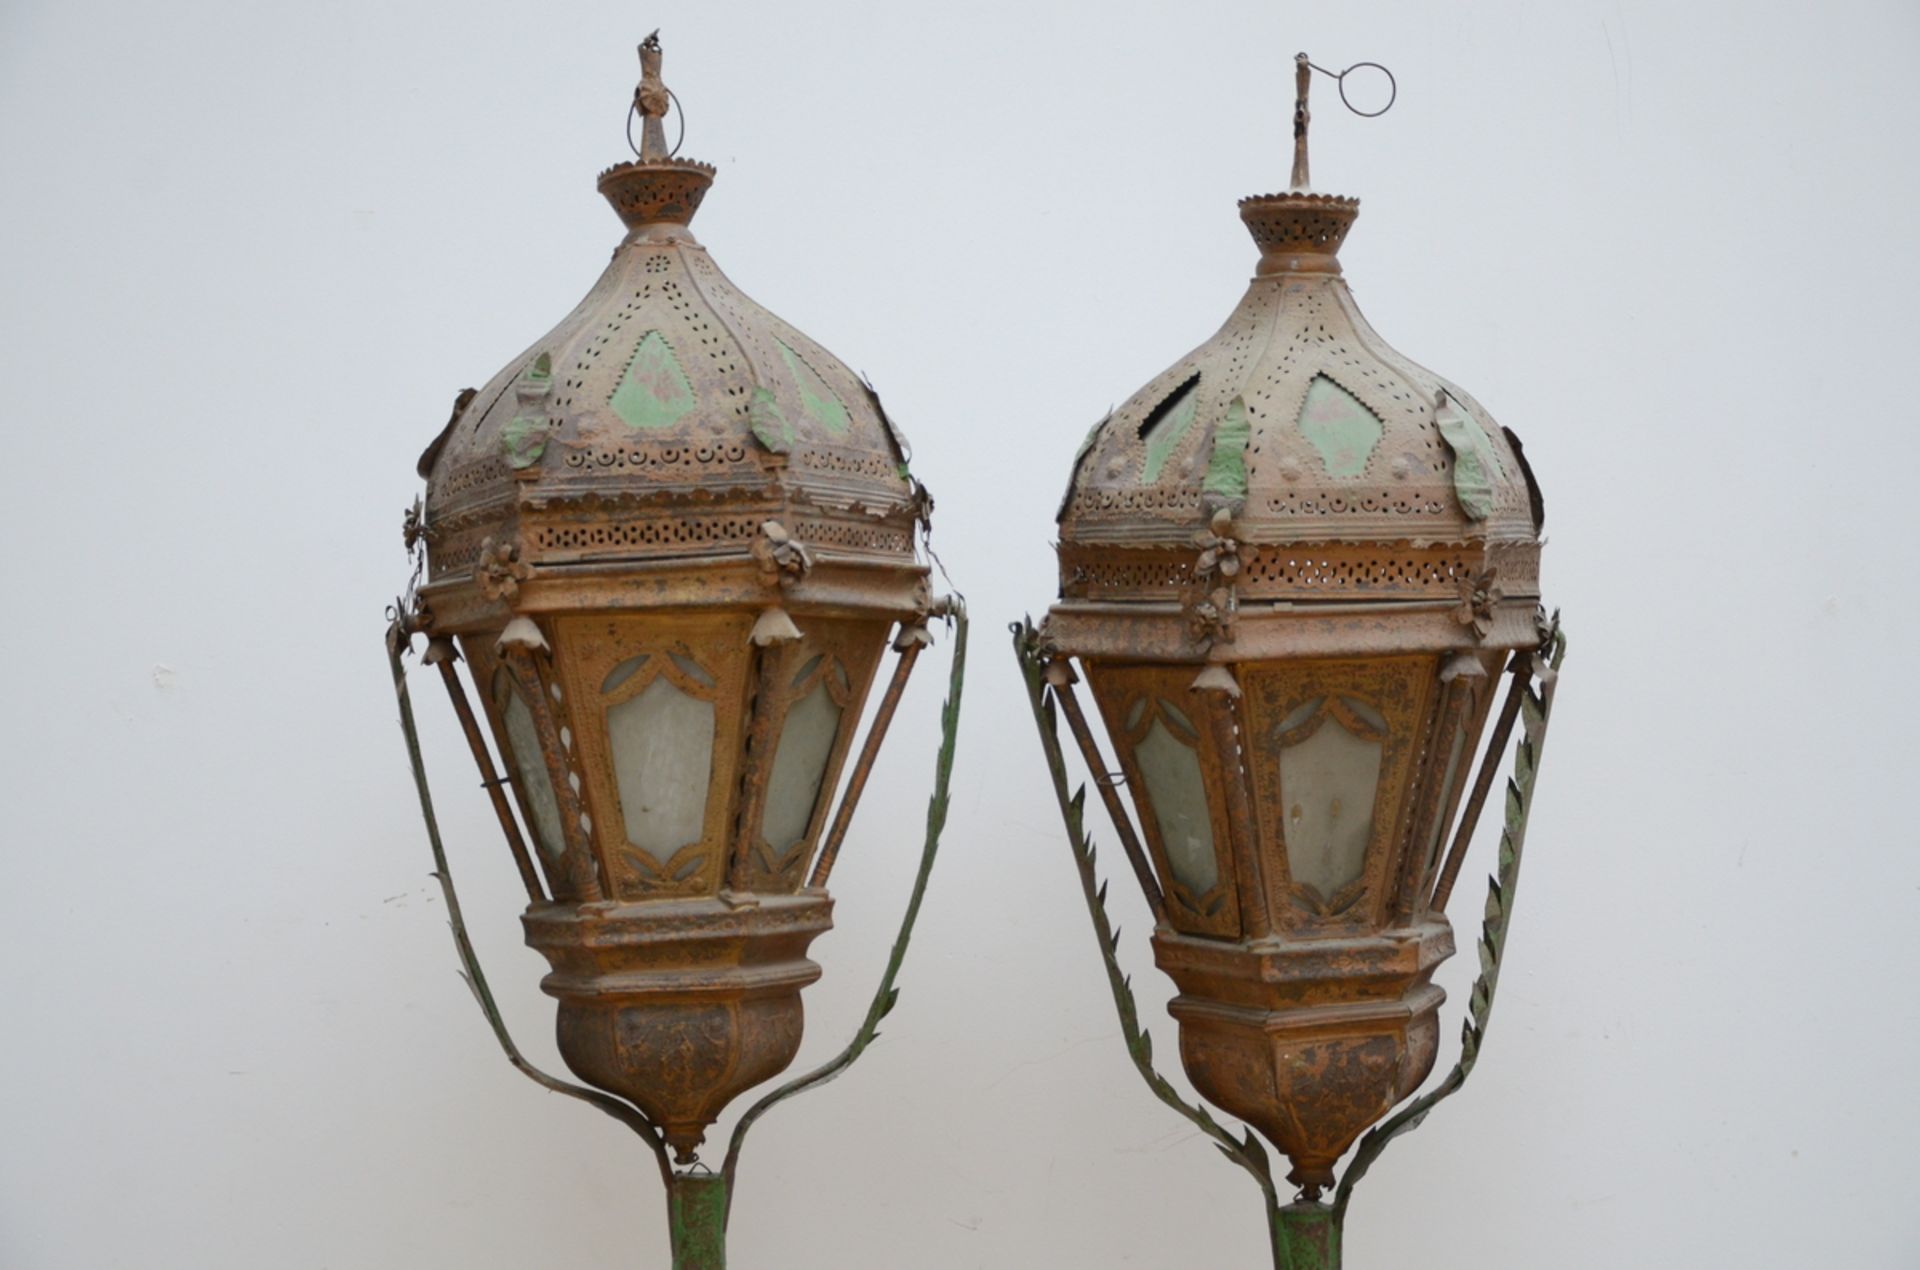 A pair of Venetian lanterns in tôle, 18th - 19th century (lantern 93 cm) - Image 2 of 3